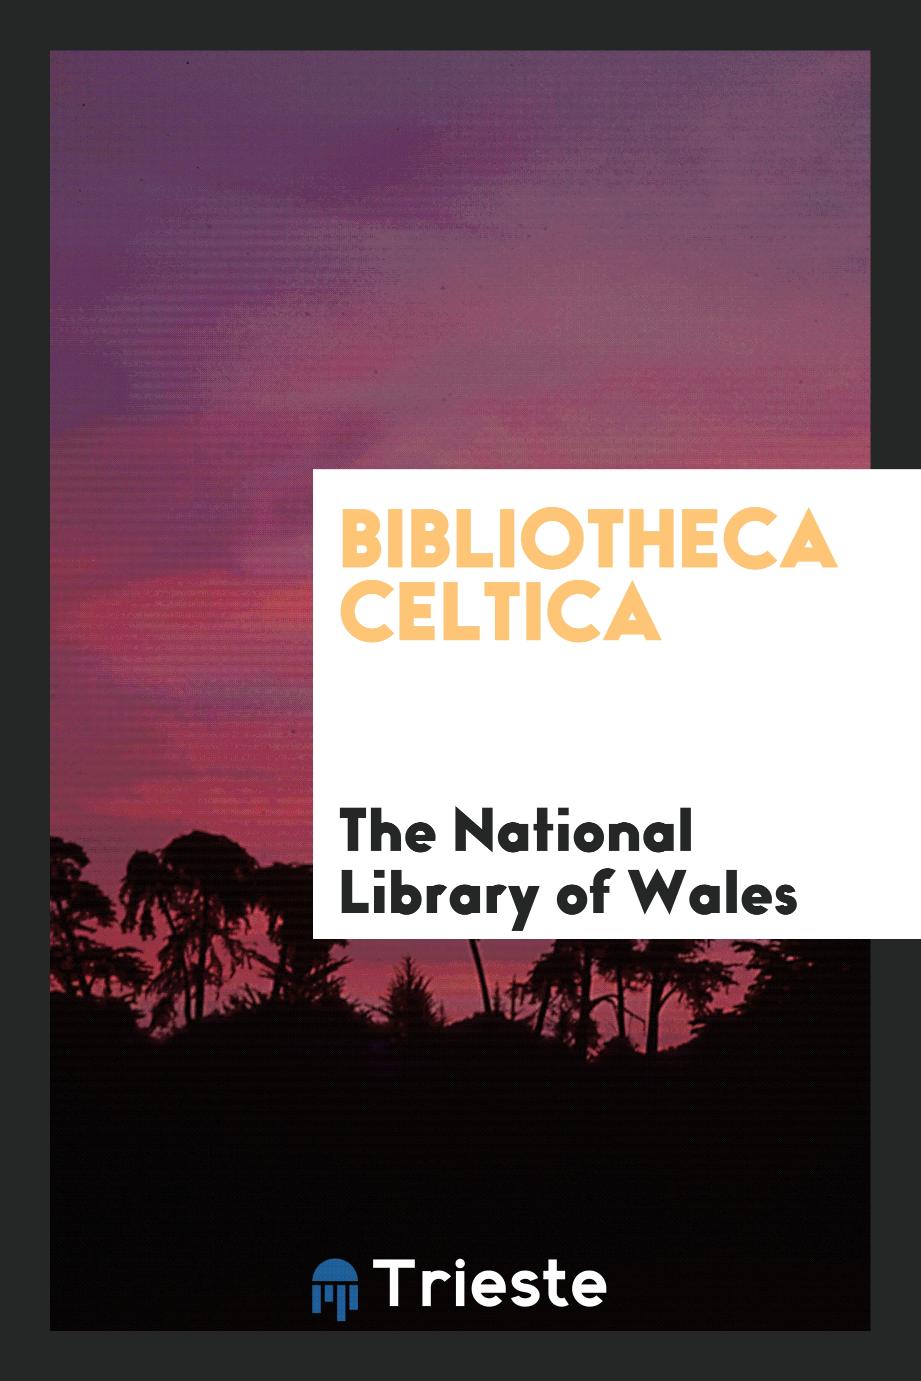 Bibliotheca celtica